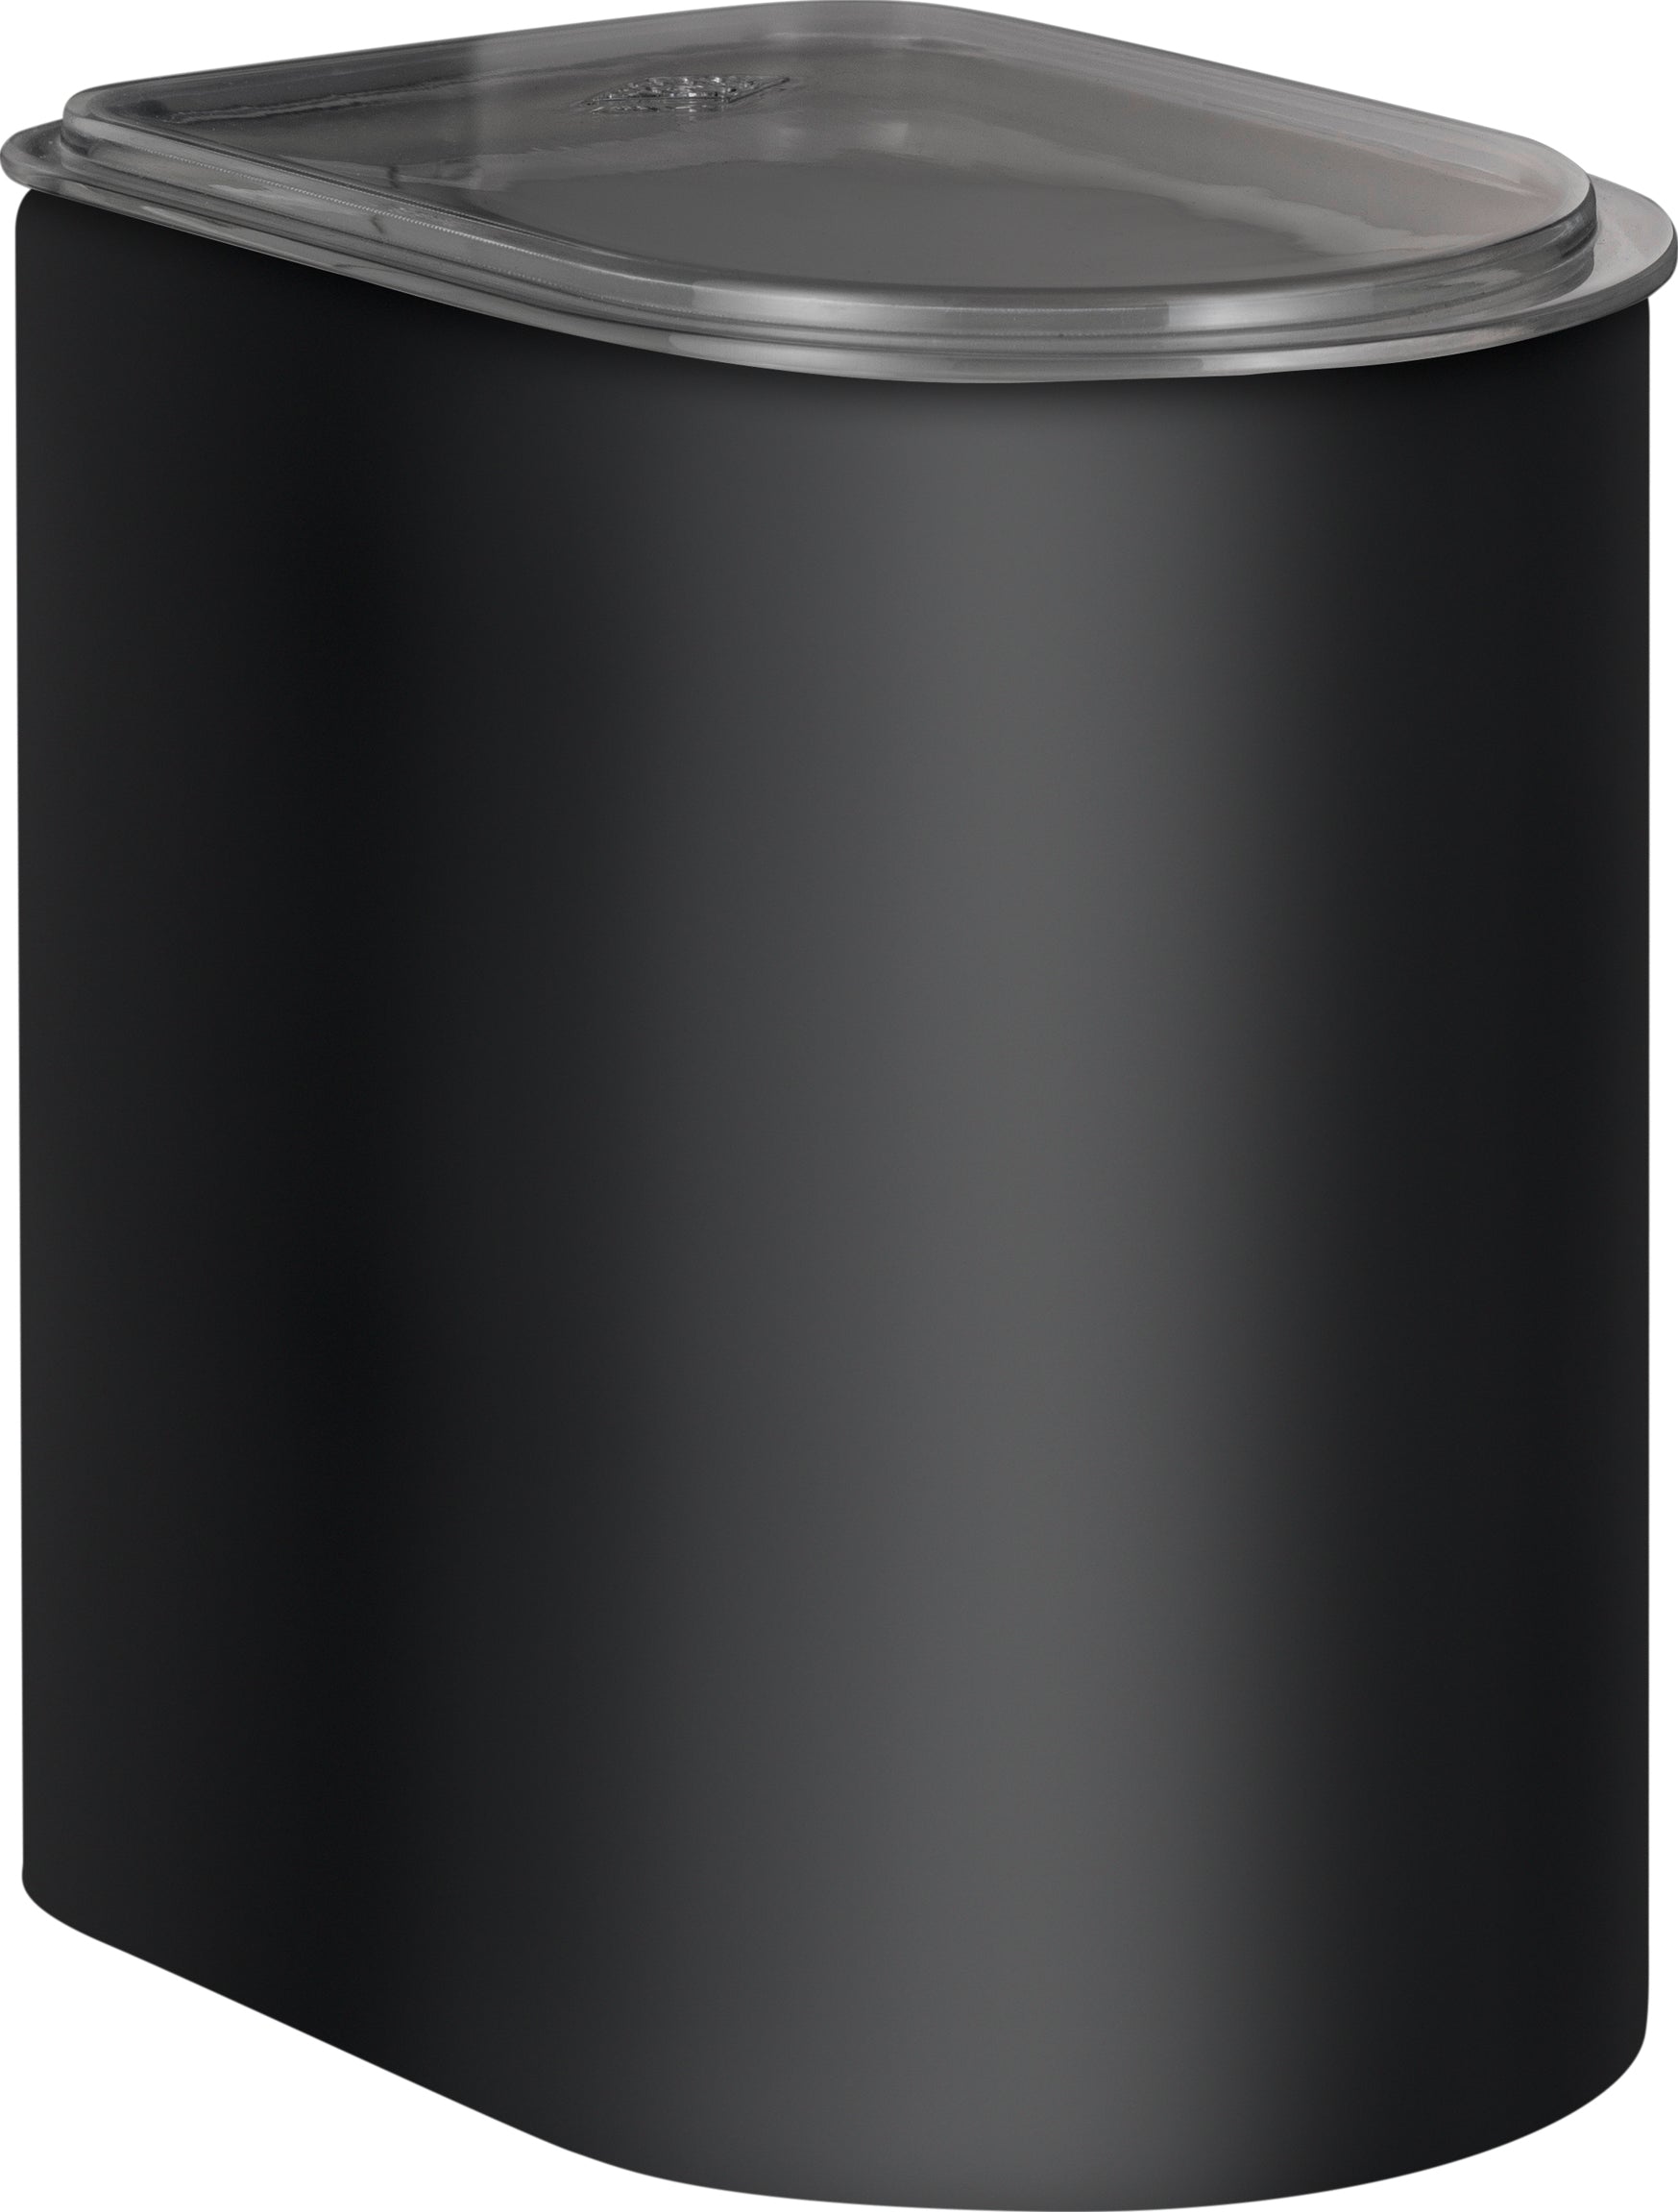 WESCO CANISTER 2,2 litru s akrylovým víkem, Black Matt